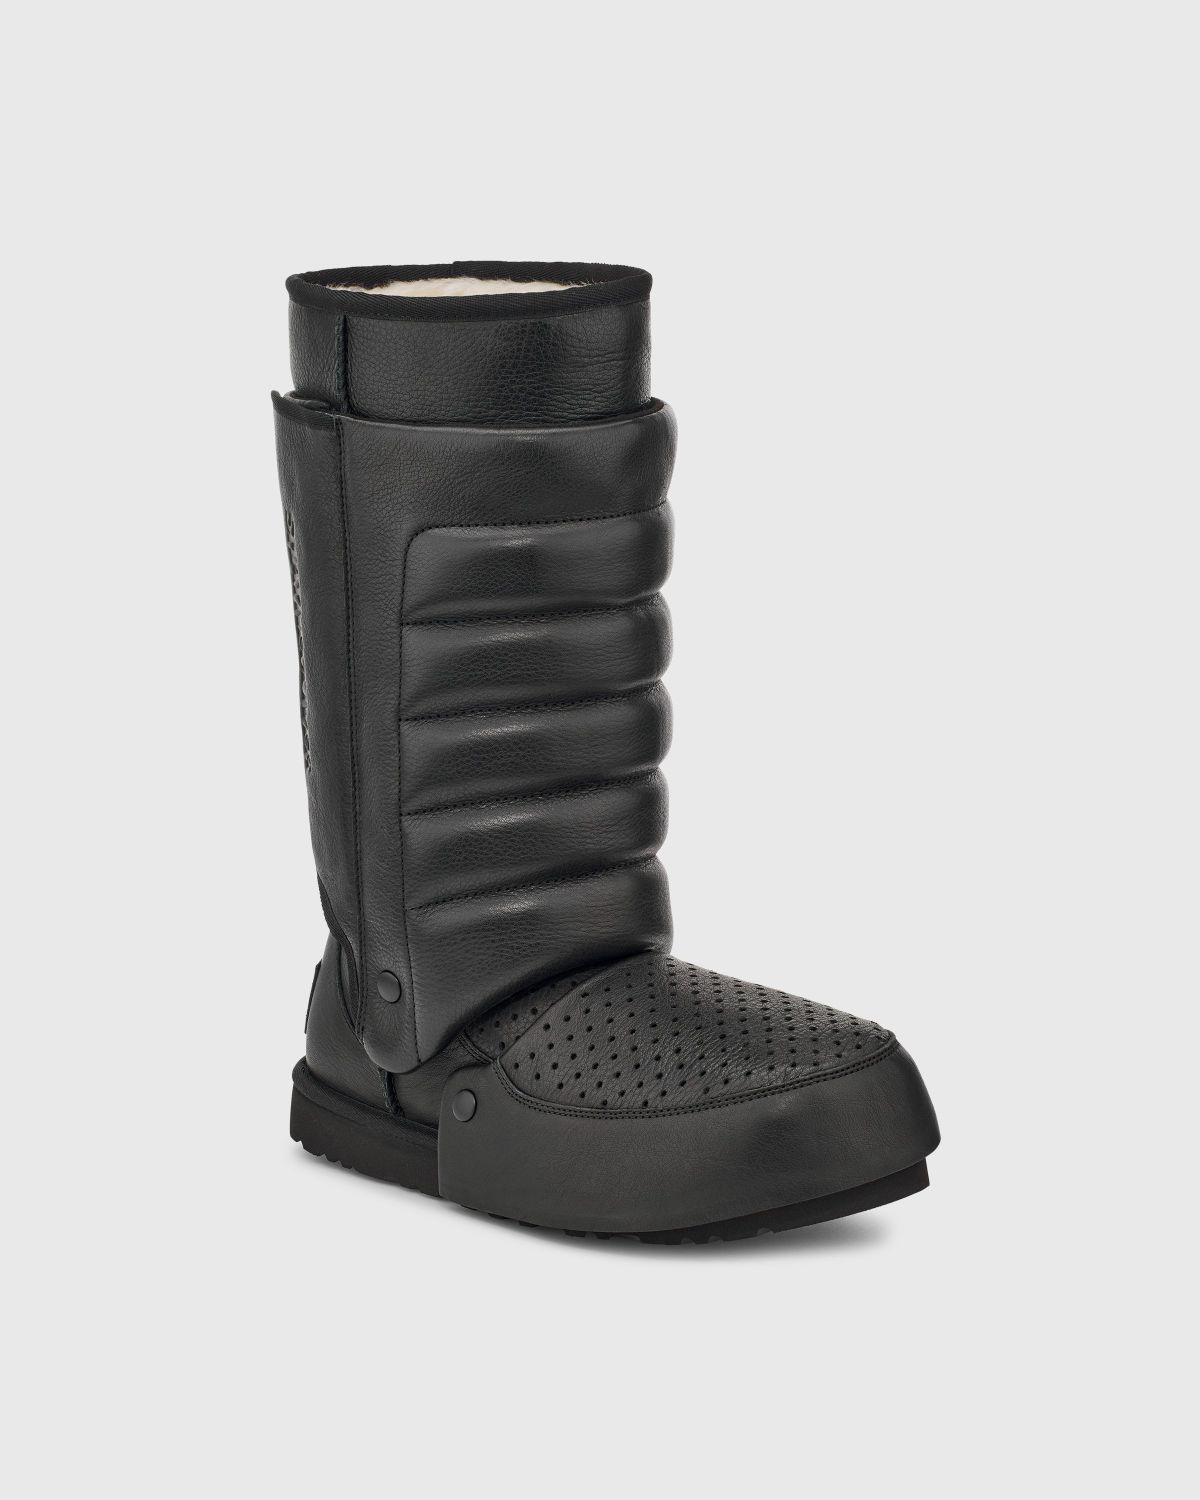 Ugg x Shayne Oliver – Tall Boot Black - Lined Boots - Black - Image 3